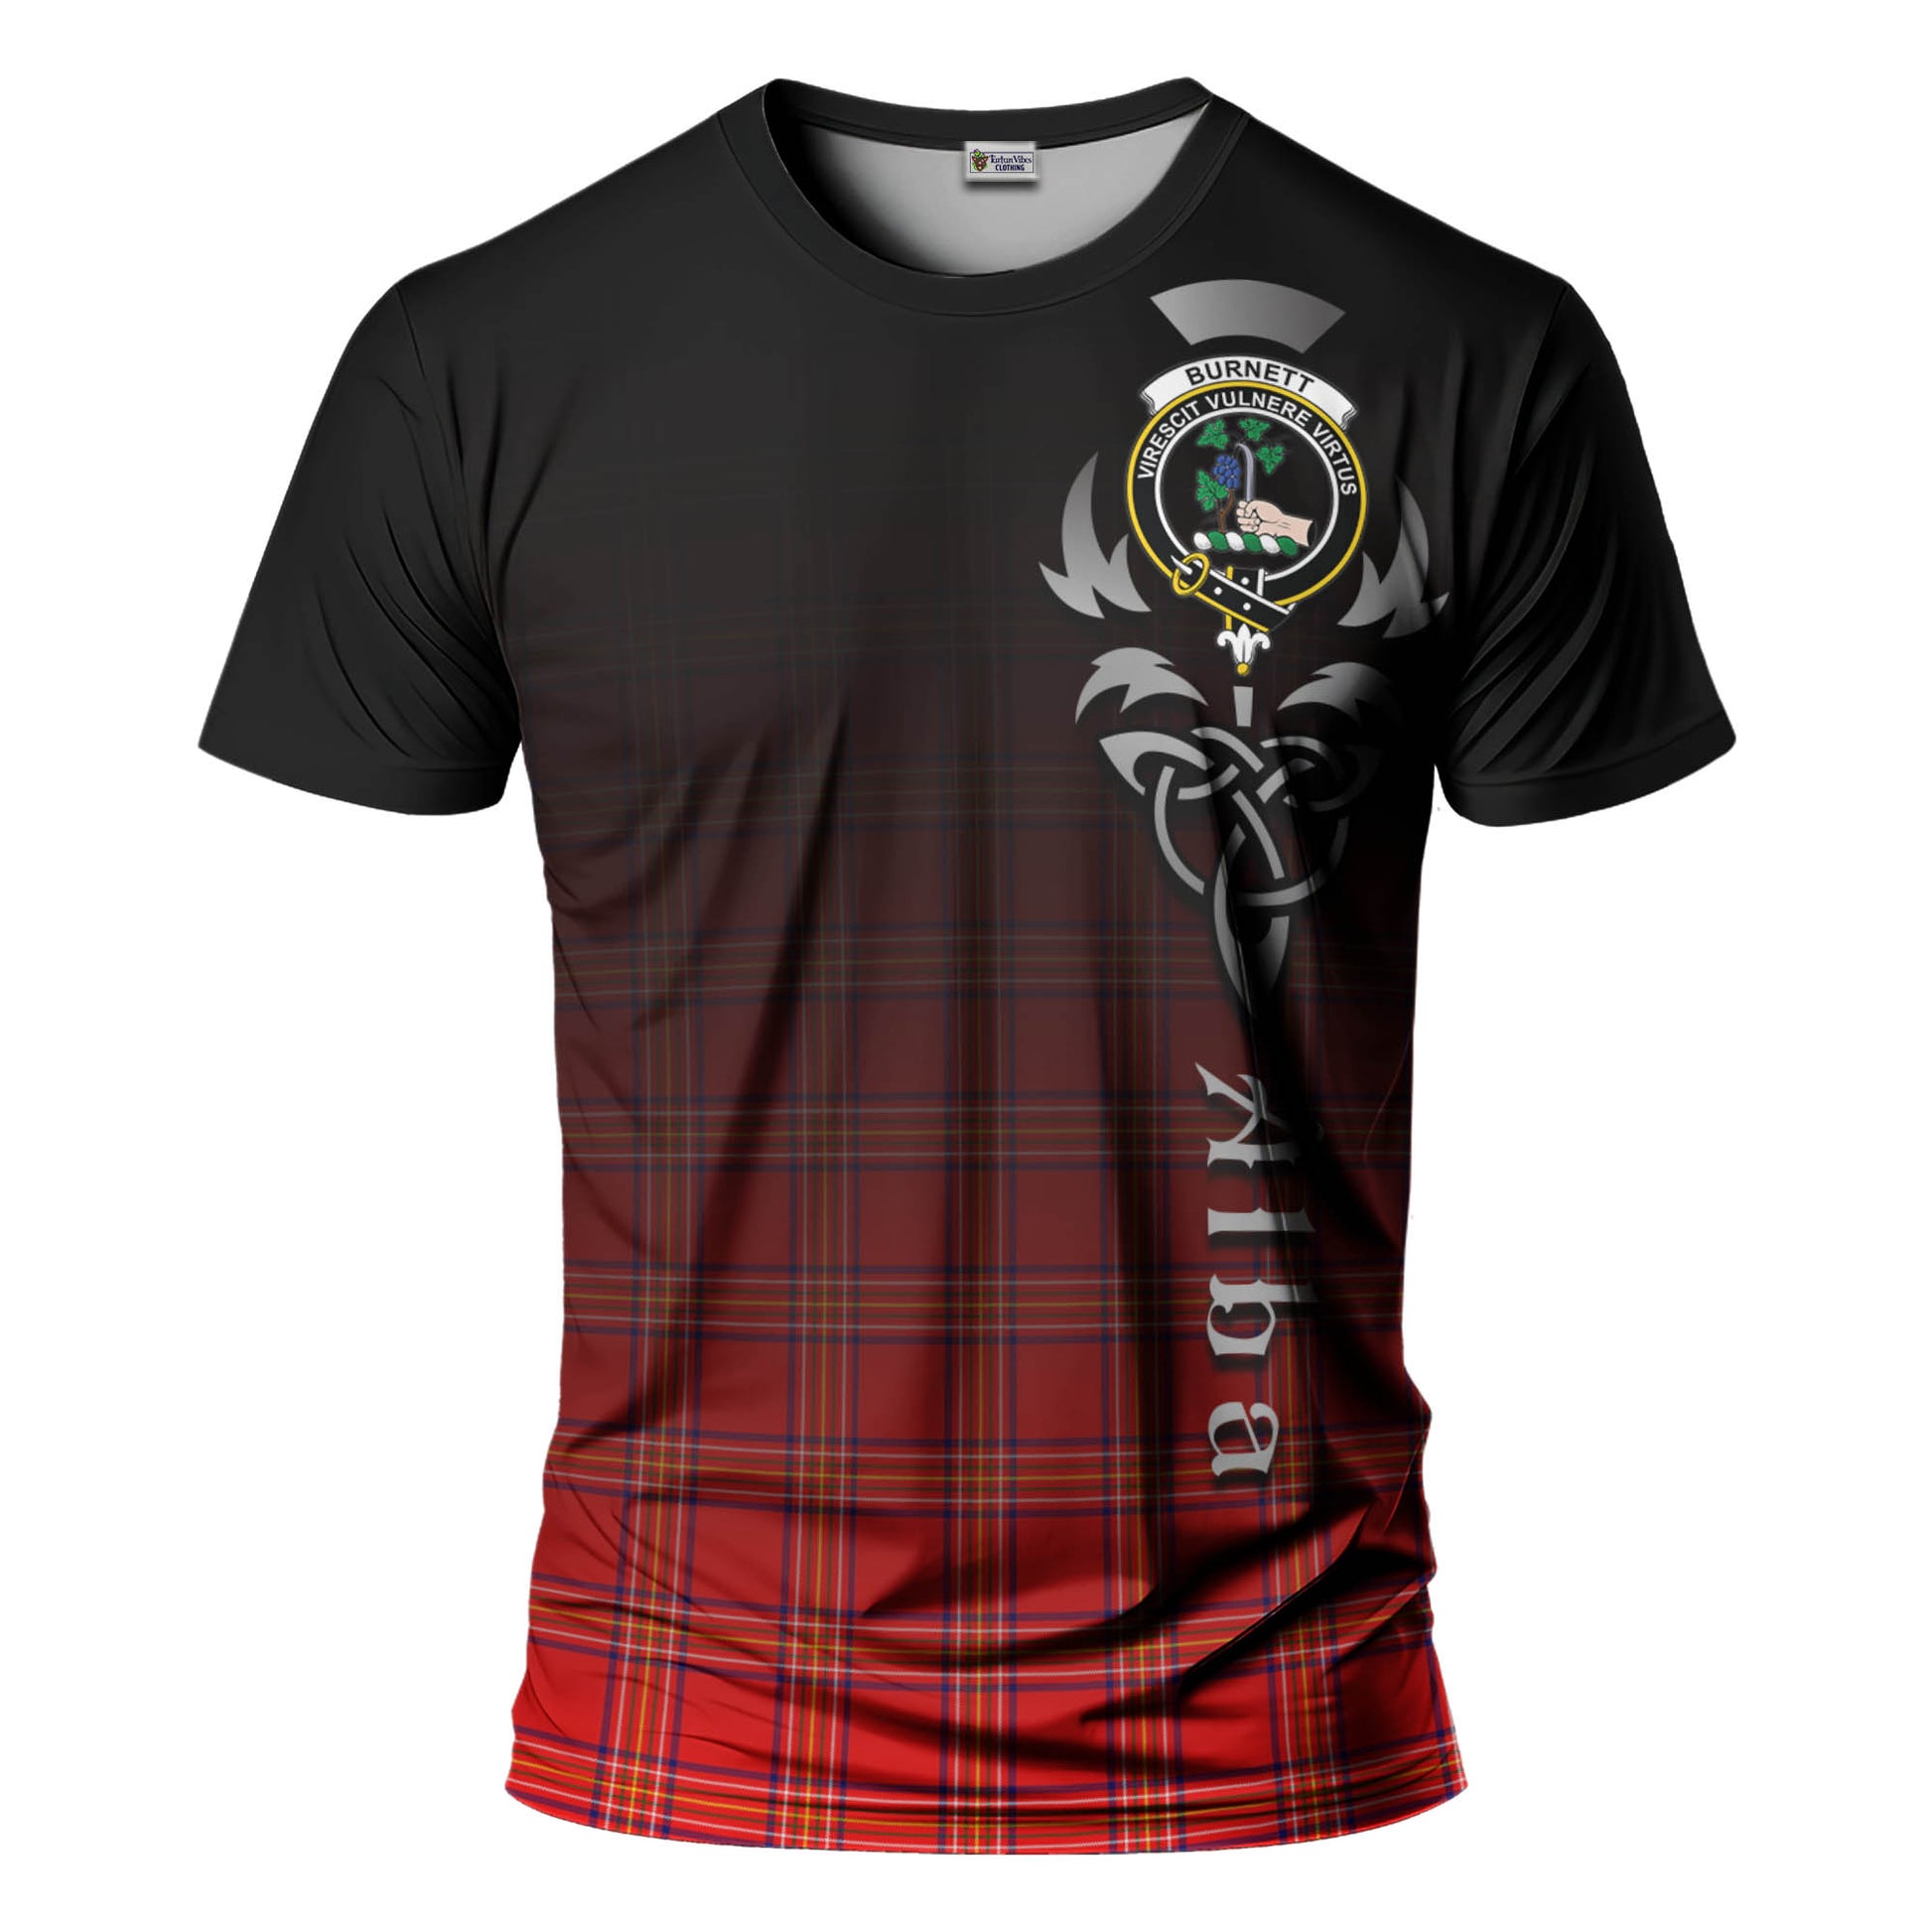 Tartan Vibes Clothing Burnett Modern Tartan T-Shirt Featuring Alba Gu Brath Family Crest Celtic Inspired